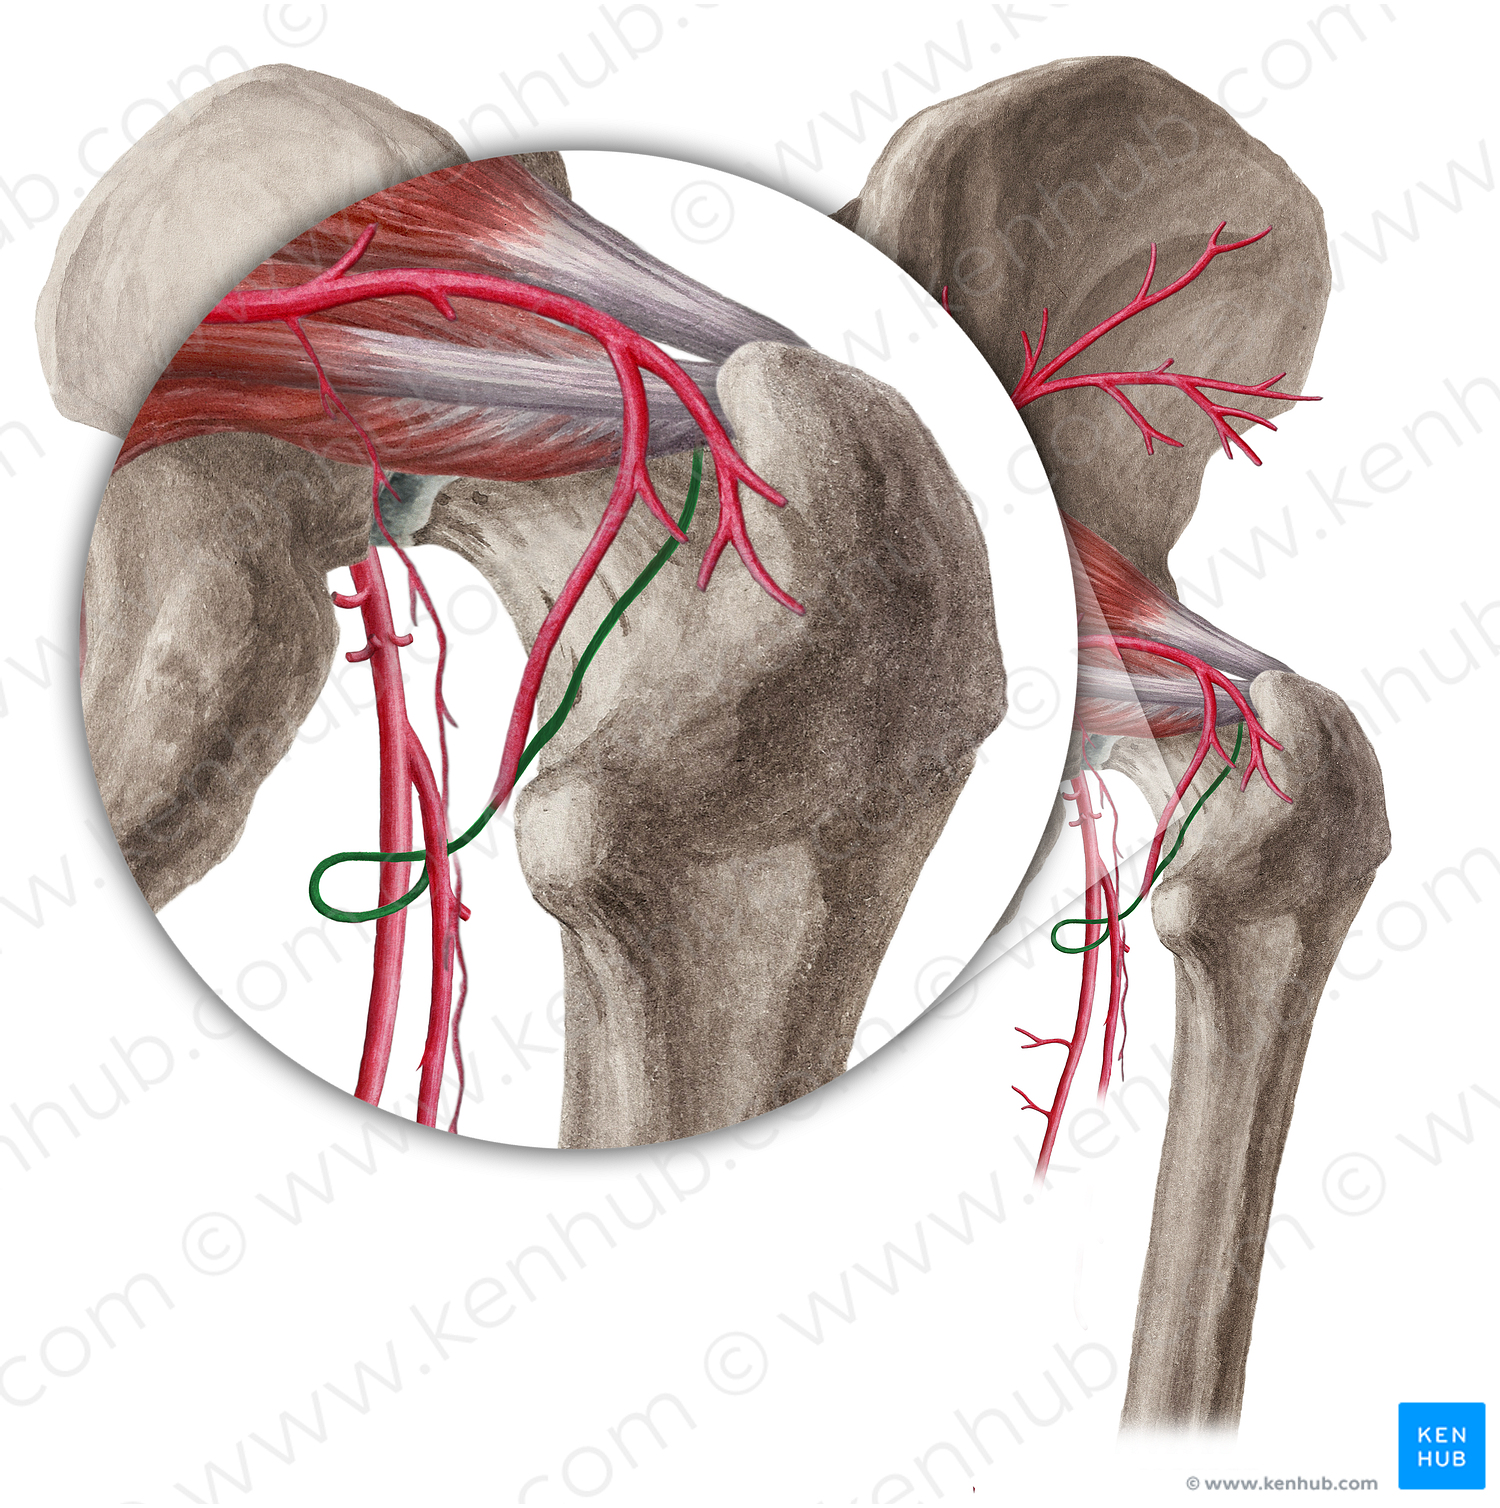 Medial circumflex femoral artery (#1033)